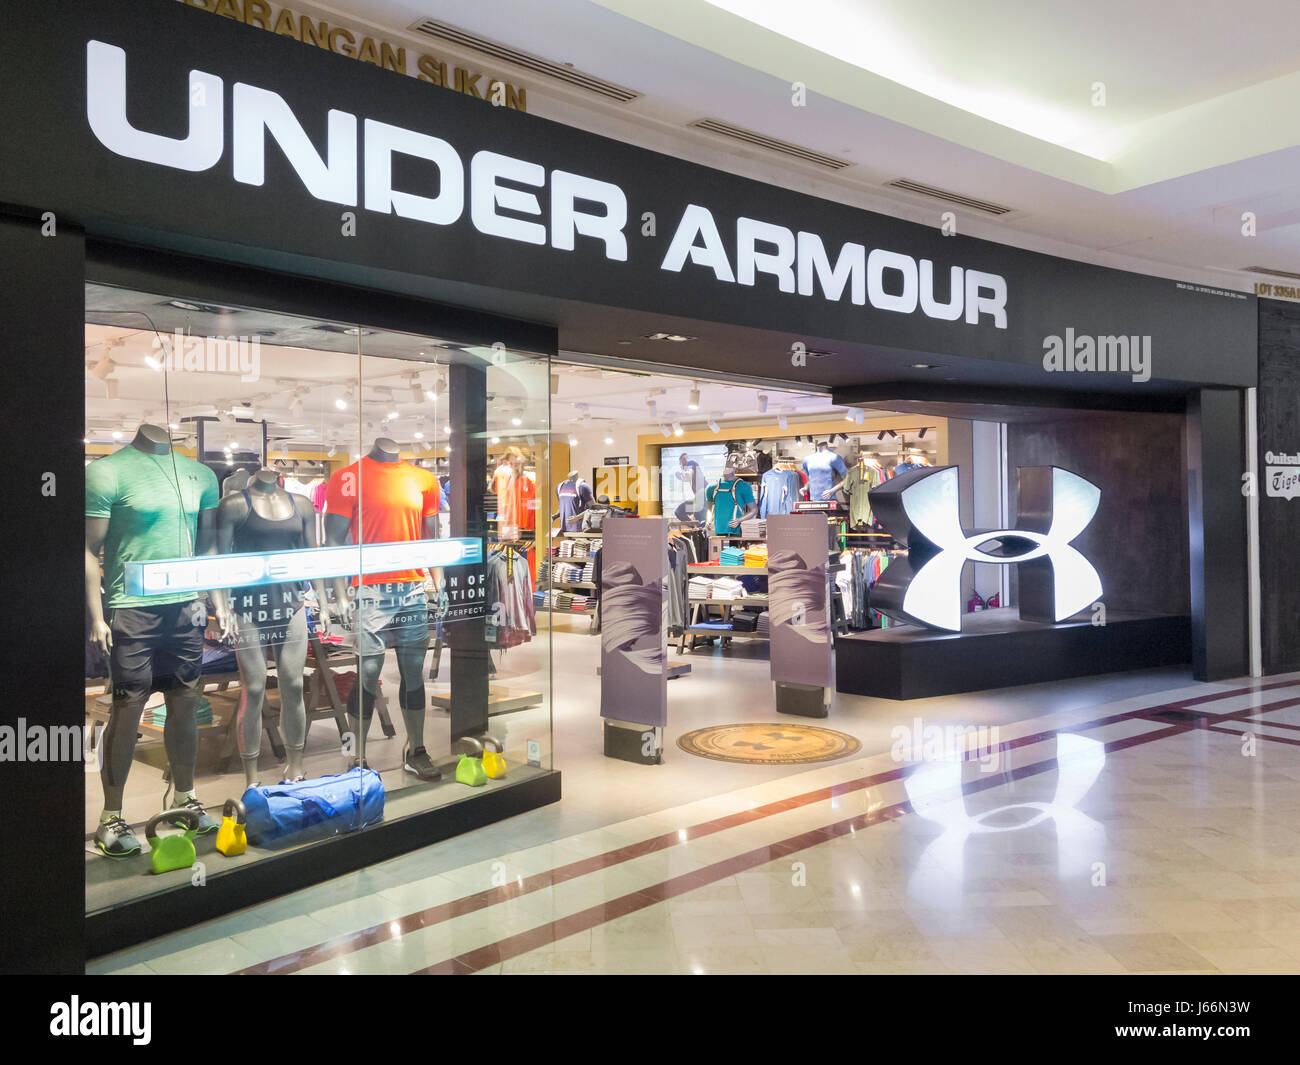 Under armour shop, Malaysia Stock Photo 